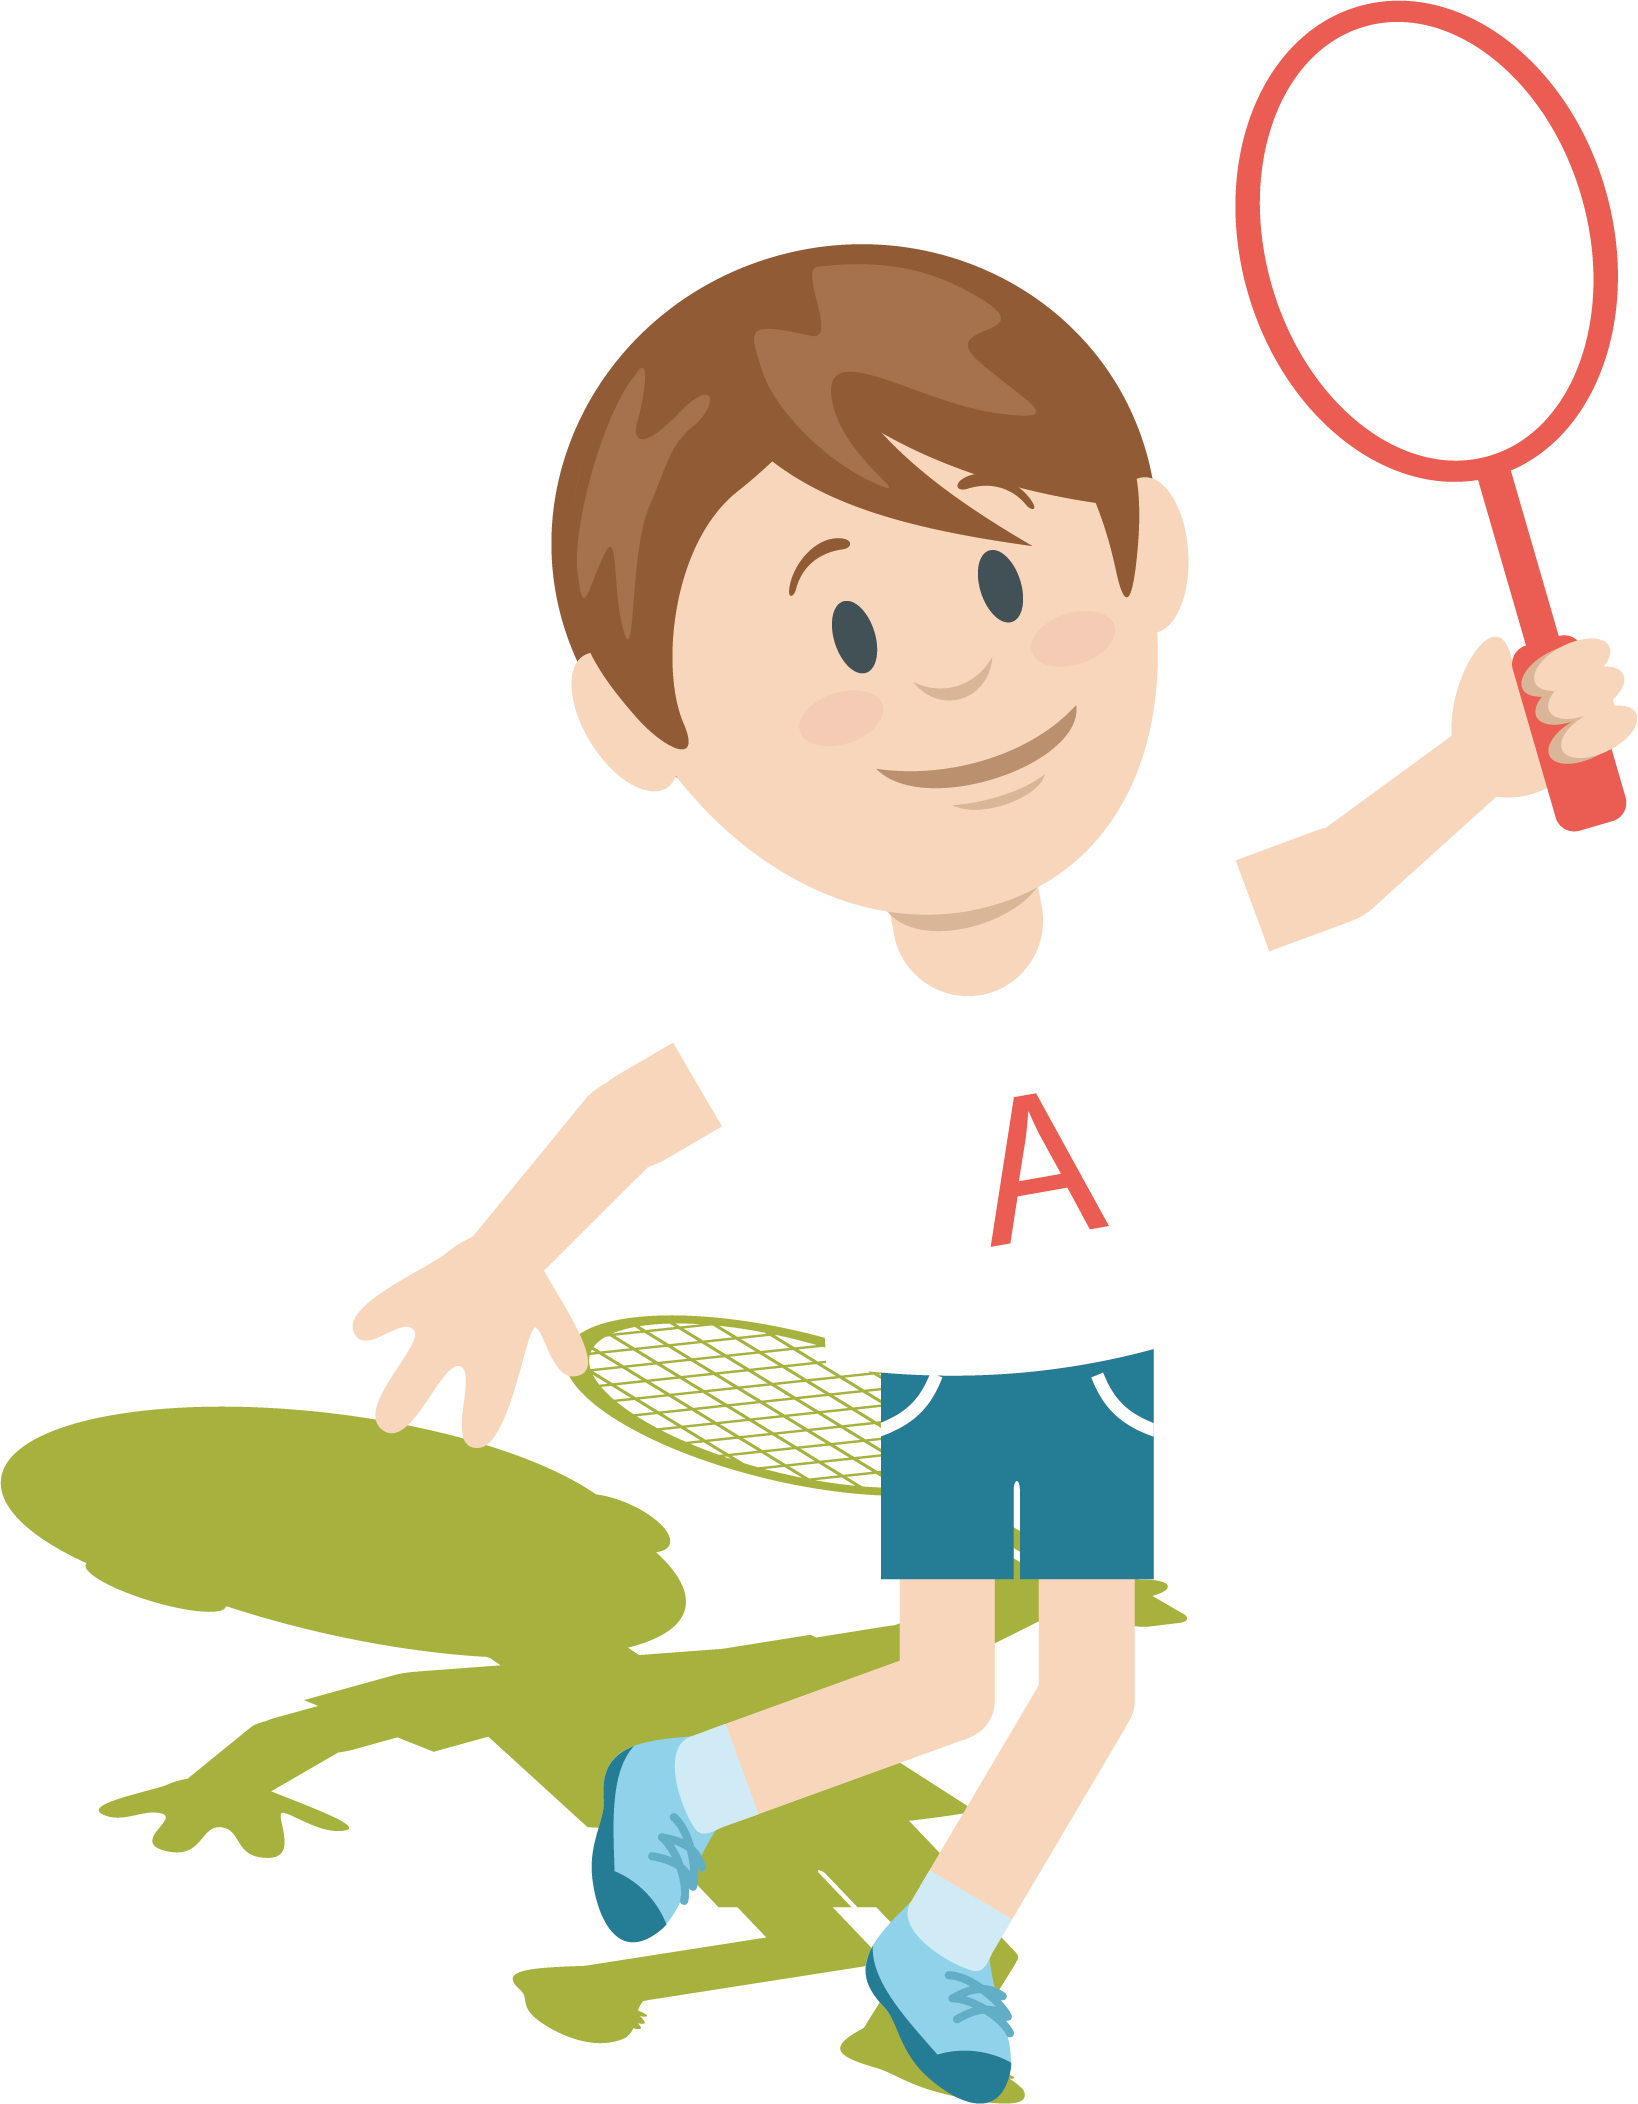 Young Boy Playing Badminton Cartoon